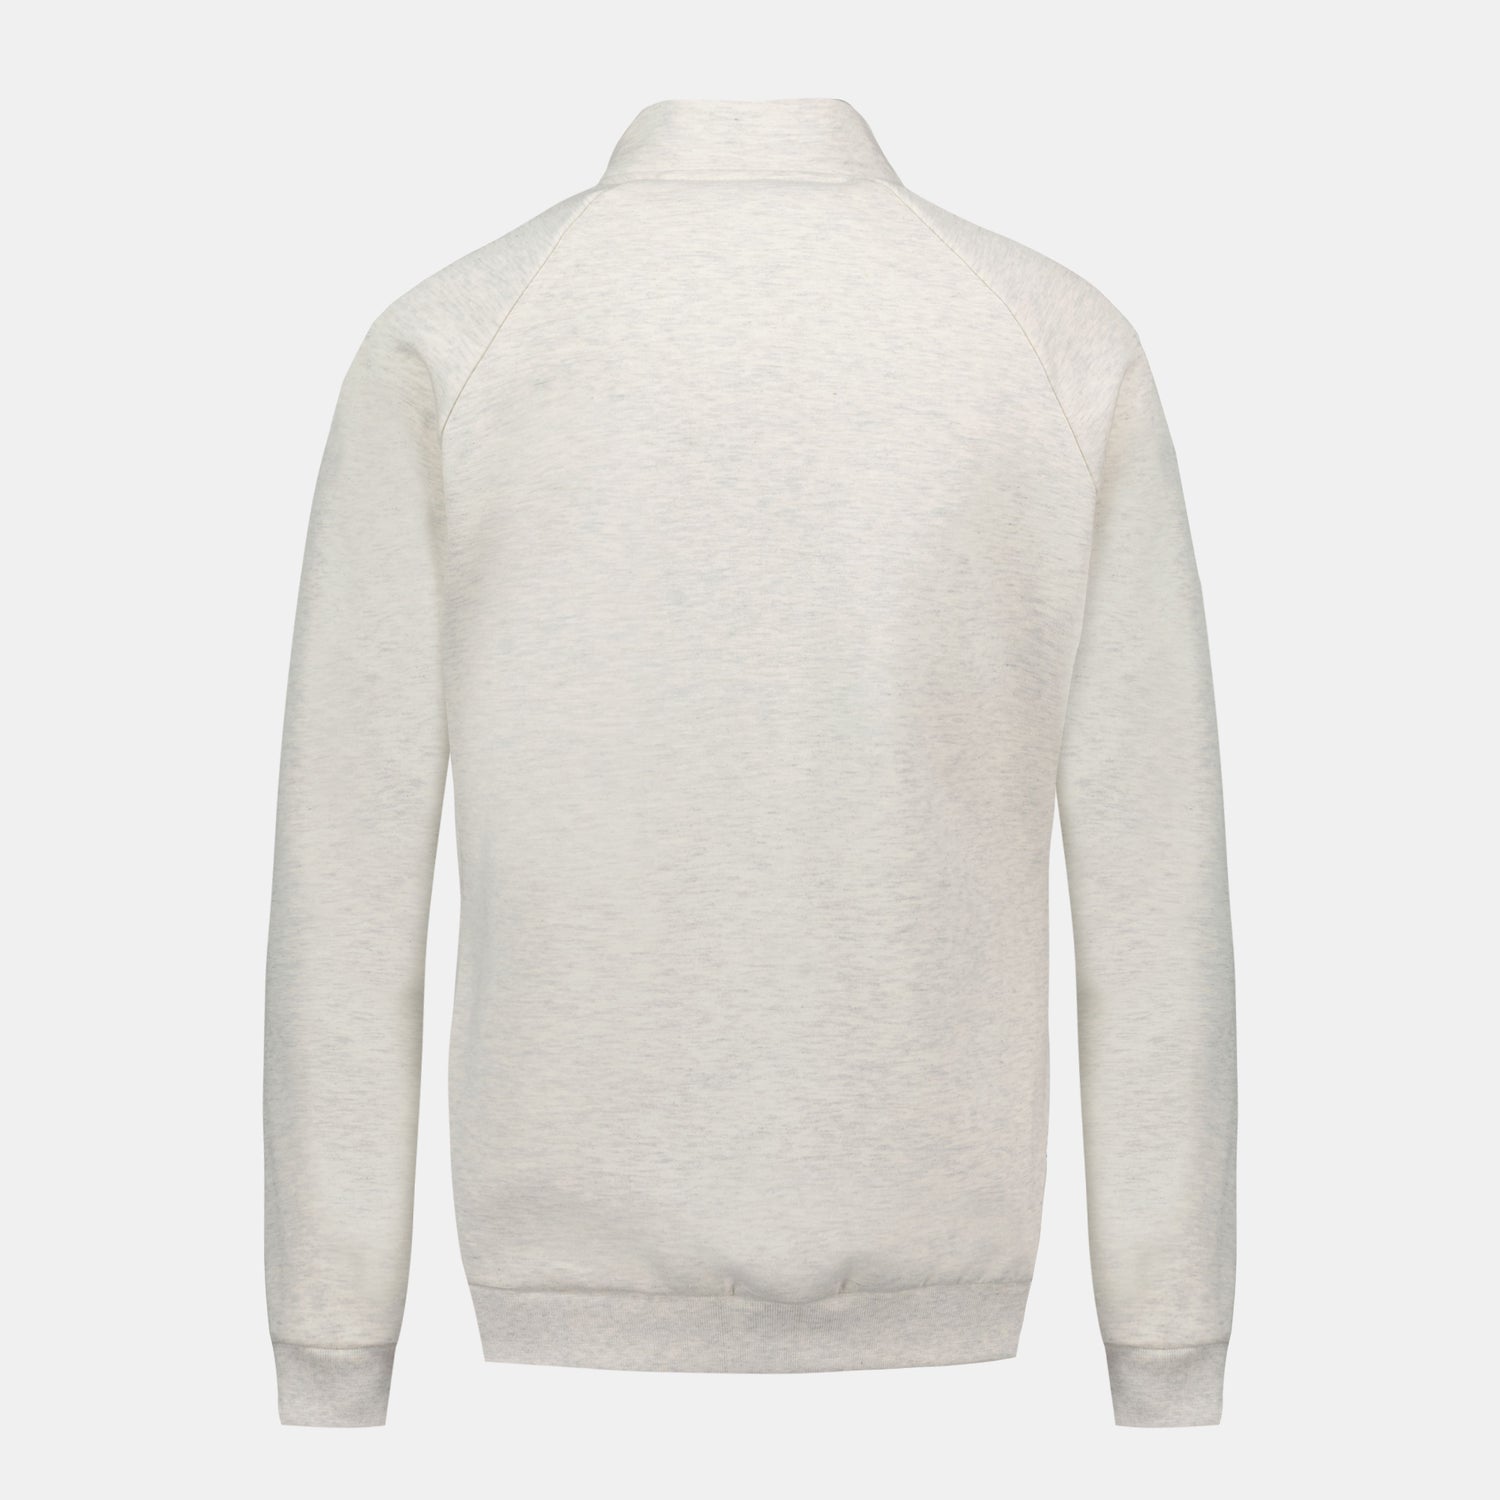 2410181-SAISON FZ Sweat N°1 W beige chiné clair  | Sweatshirt for women